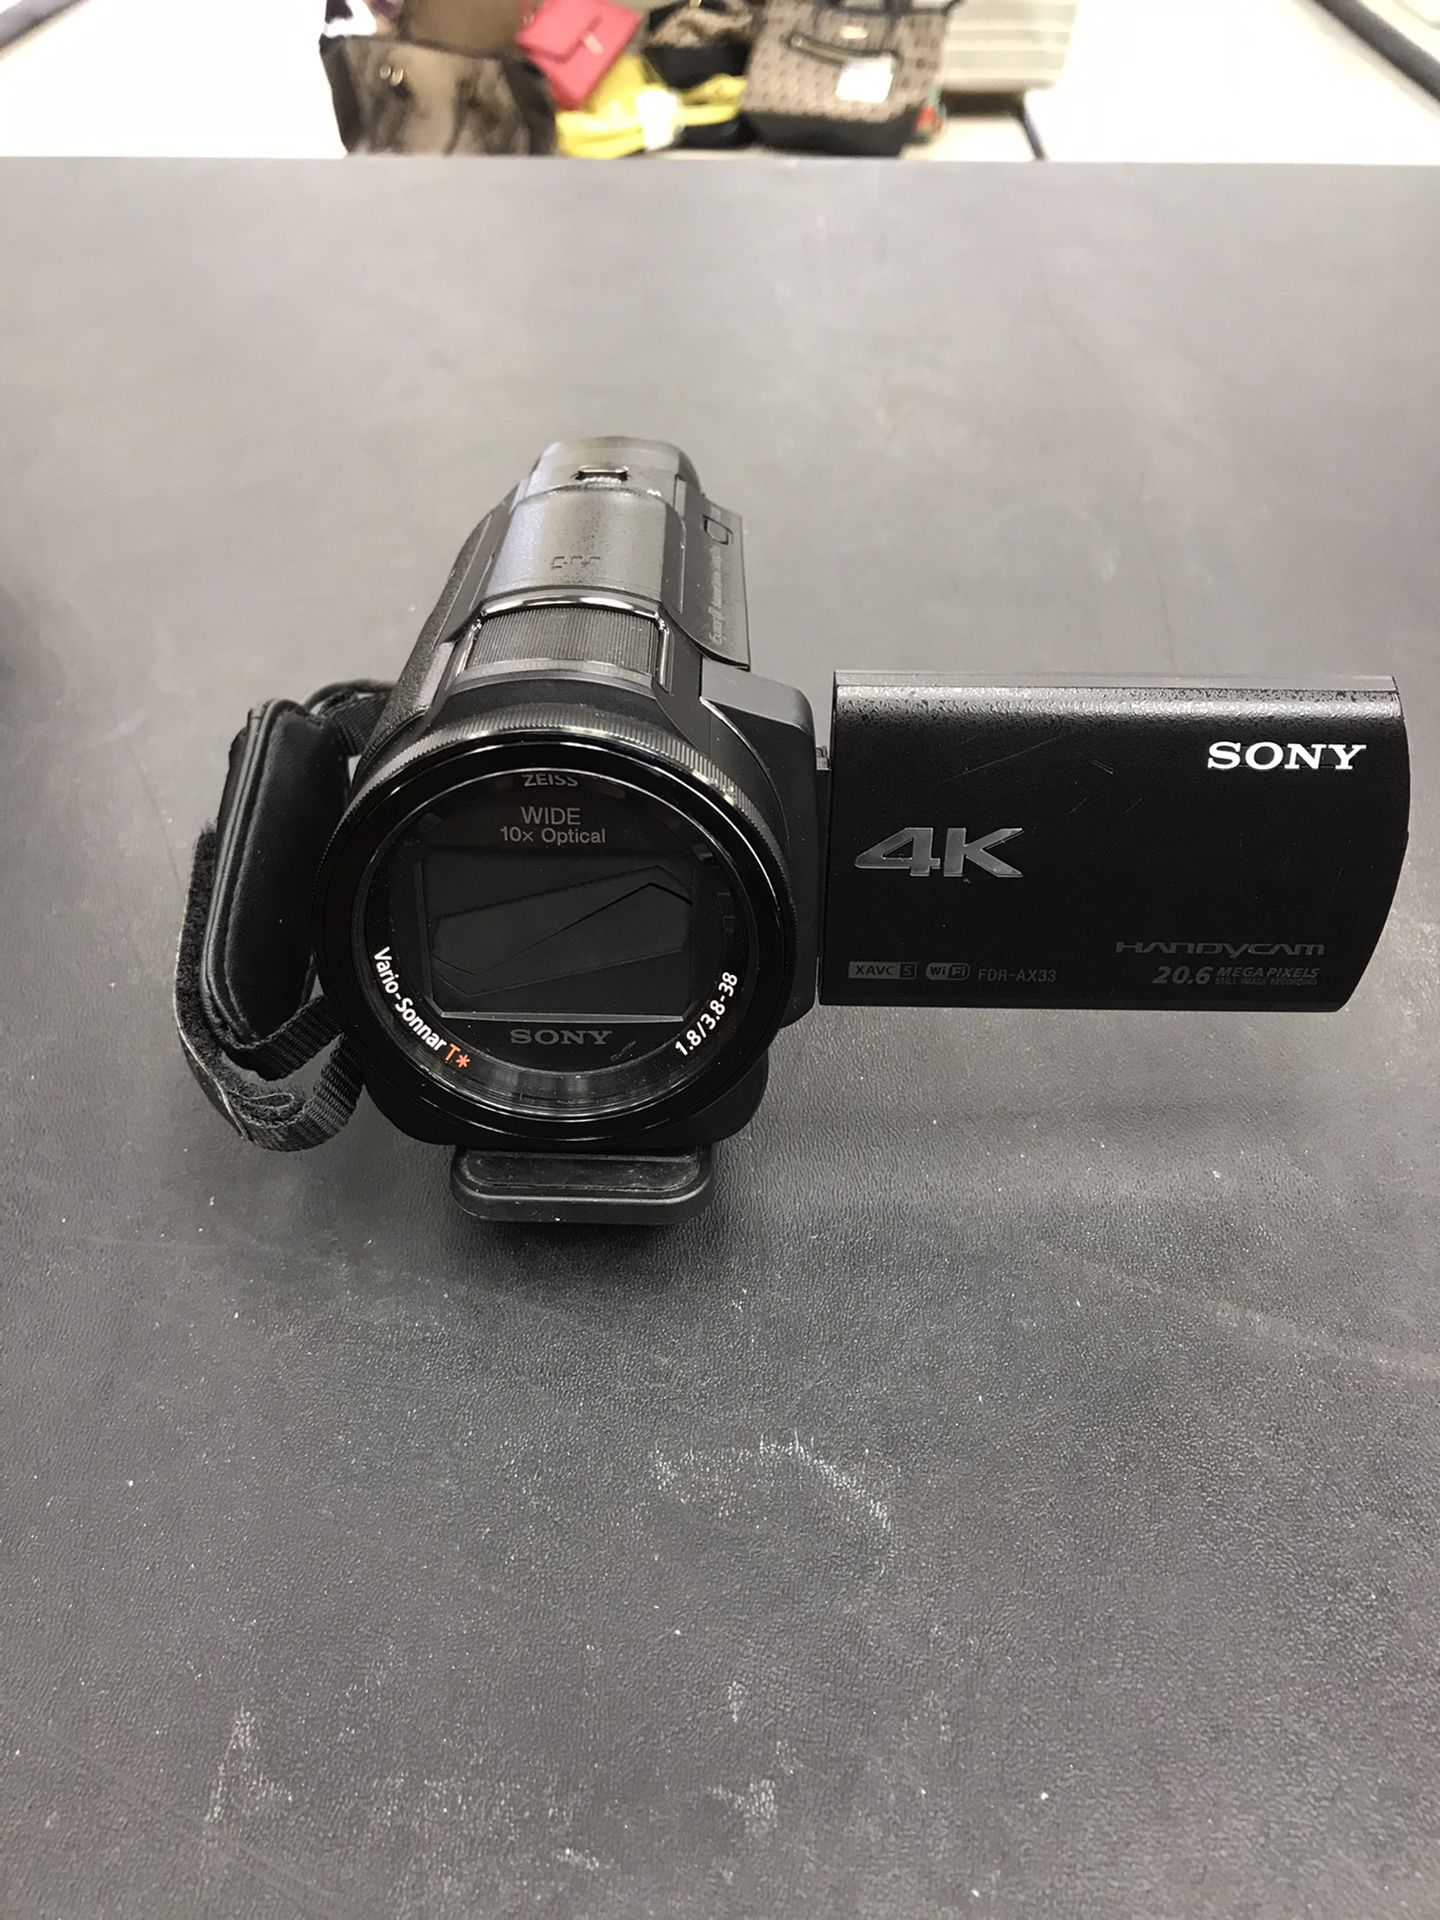 Sony 4K Handycam FDR-AX33 with 128gb memory card